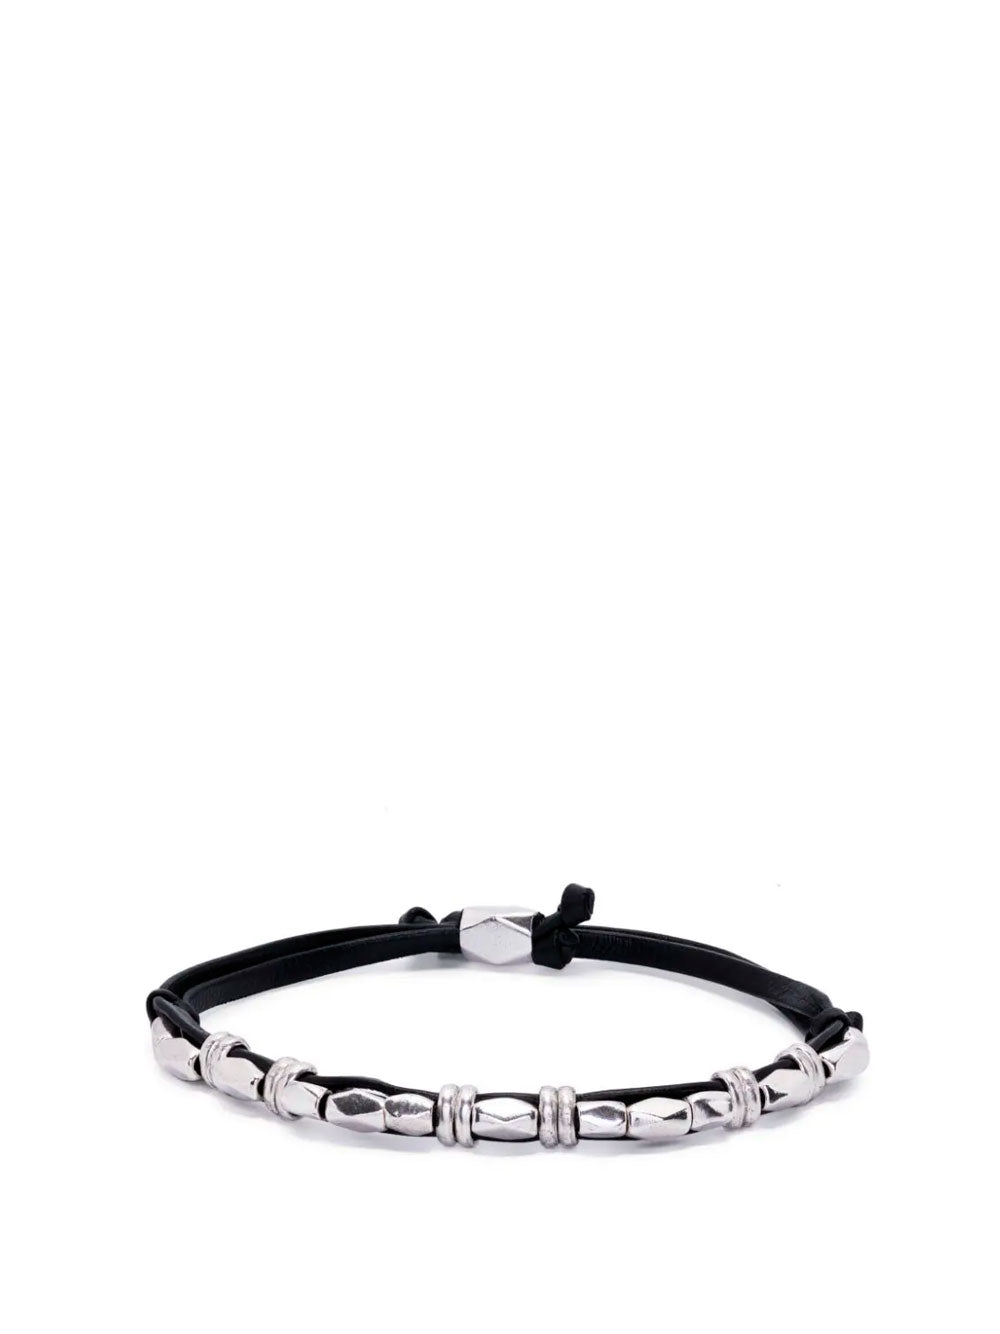 Marant Bracelet Black/Silver - Mens - Jewellery Isabel Marant